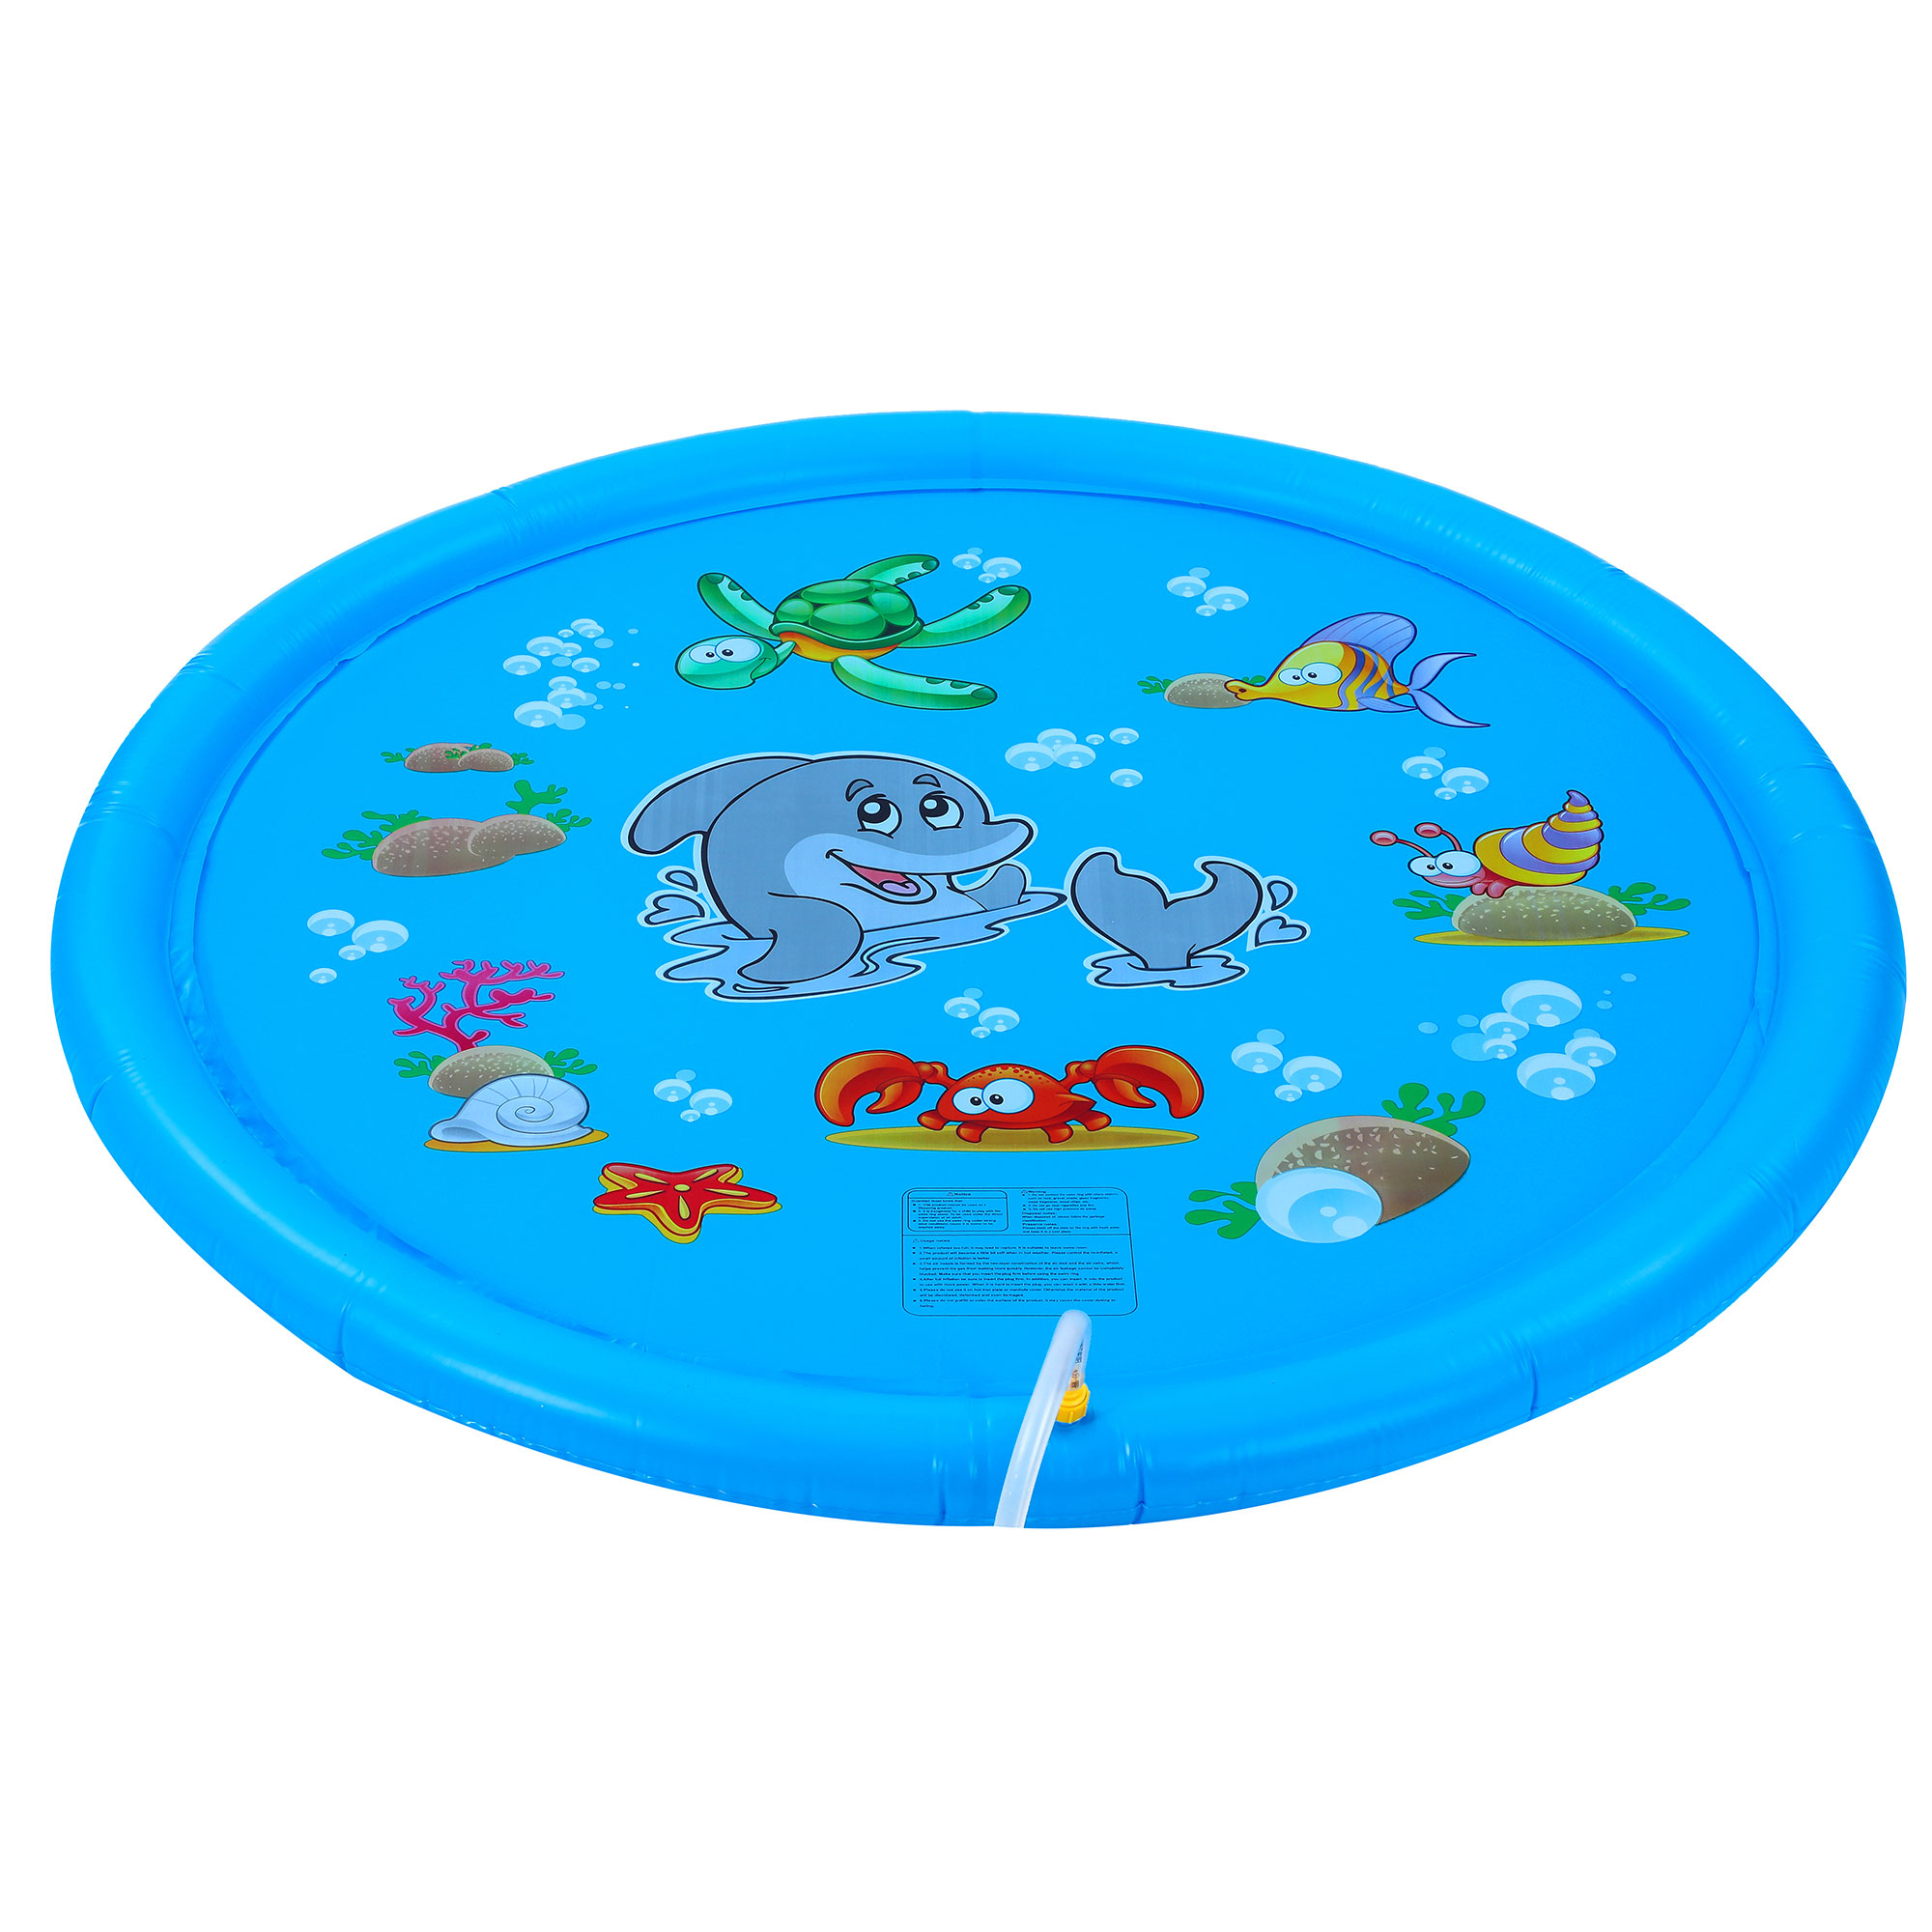 Dimple 67-inch Large Kids Sprinkler Play Mat For Toddlers, Big Kids - Outdoor Backyard Kid/Toddler Sprinkler Pool - Fun Splash Pads For Kids